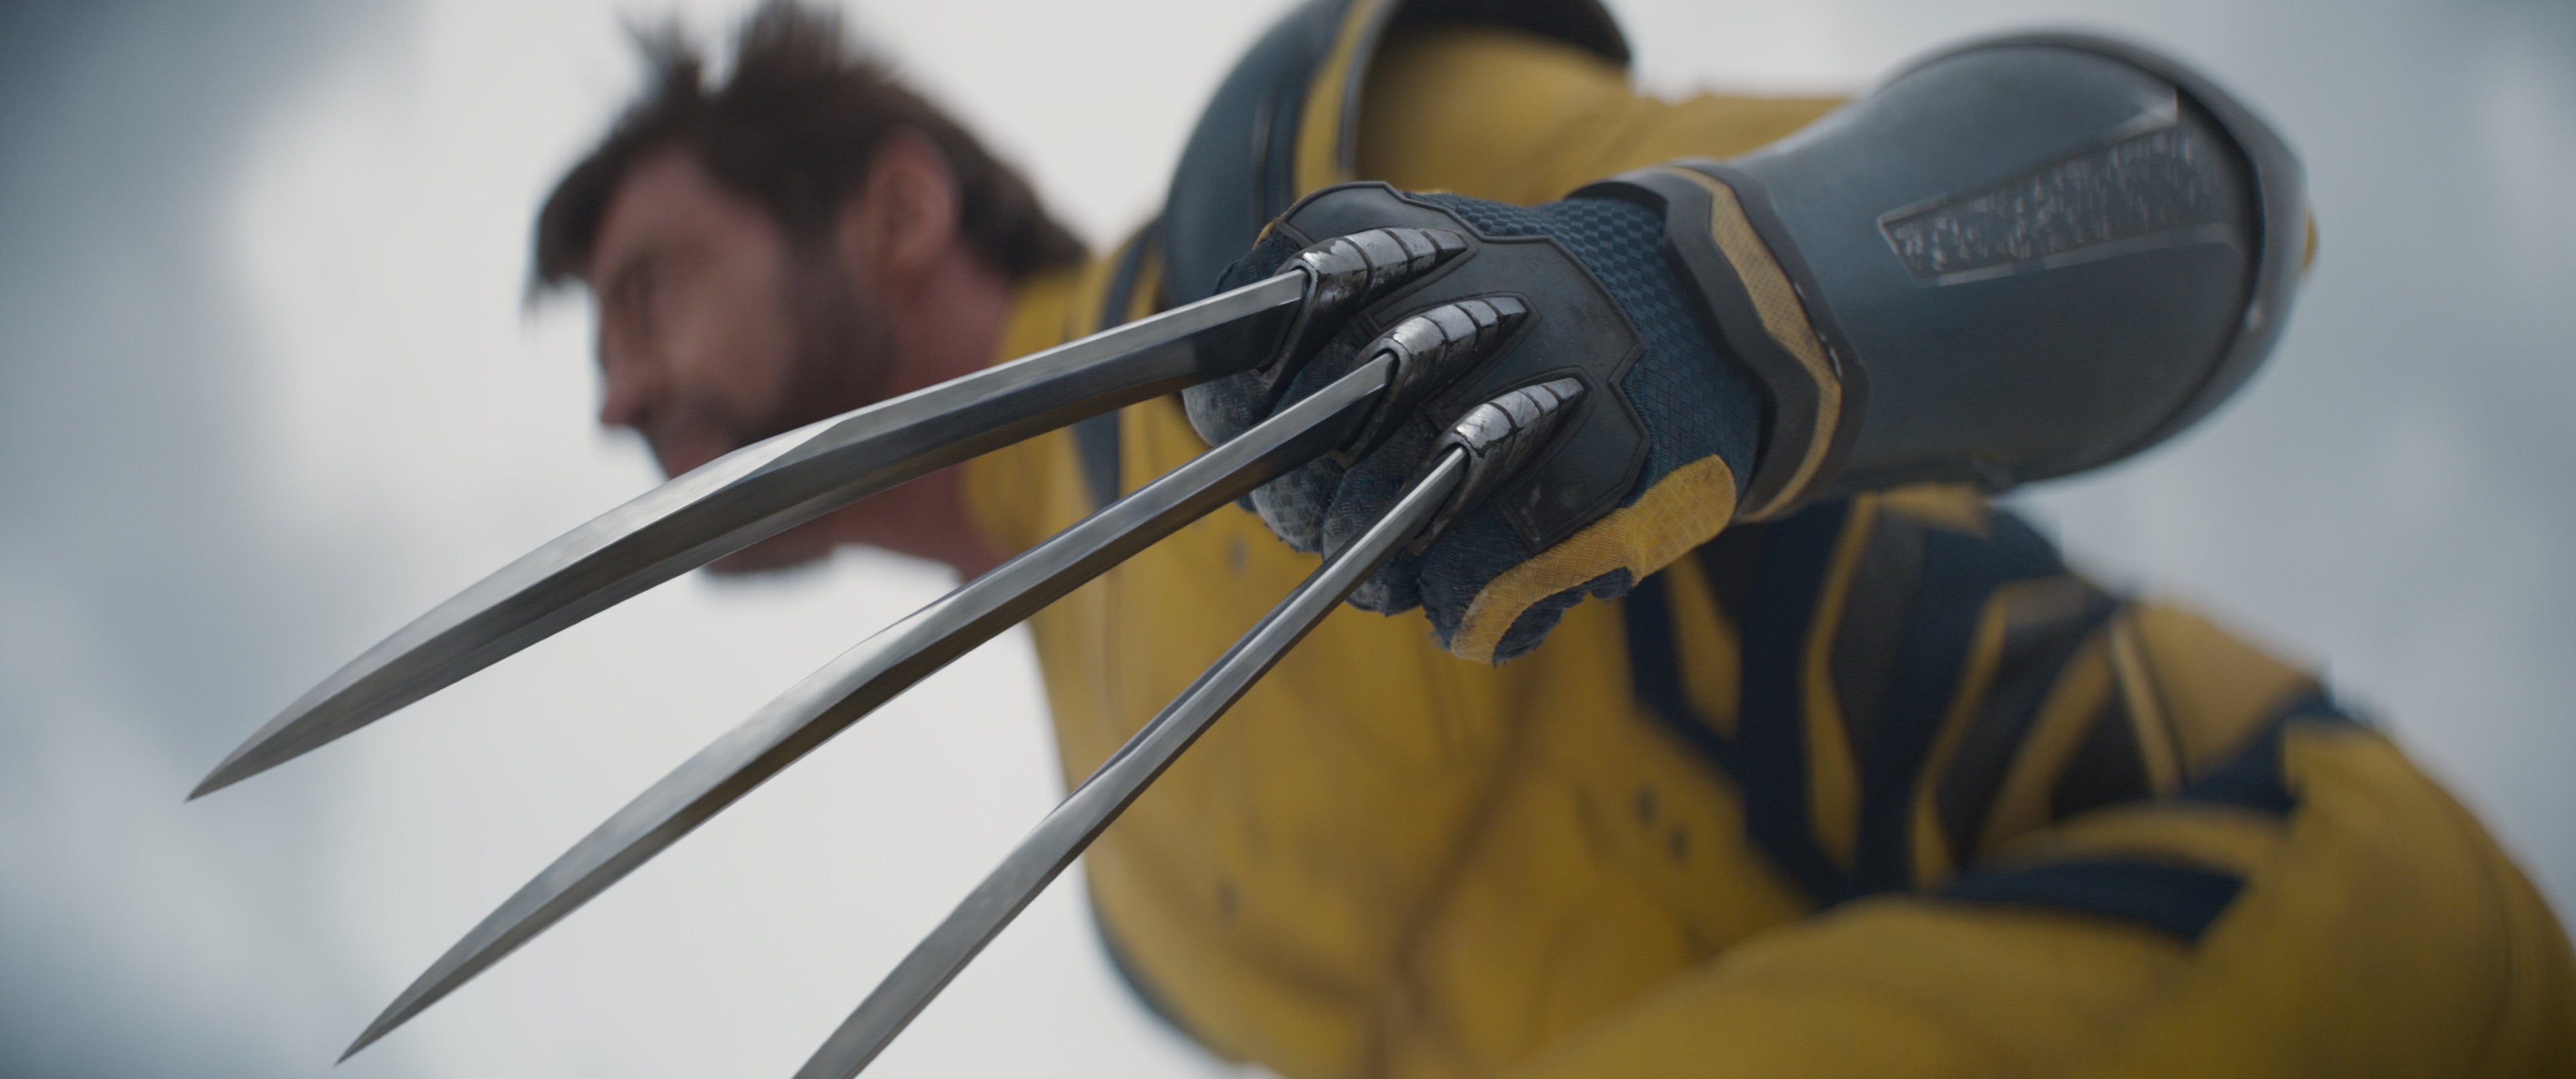 Hugh Jackman como Wolverine/Logan em "Deadpool & Wolverine"